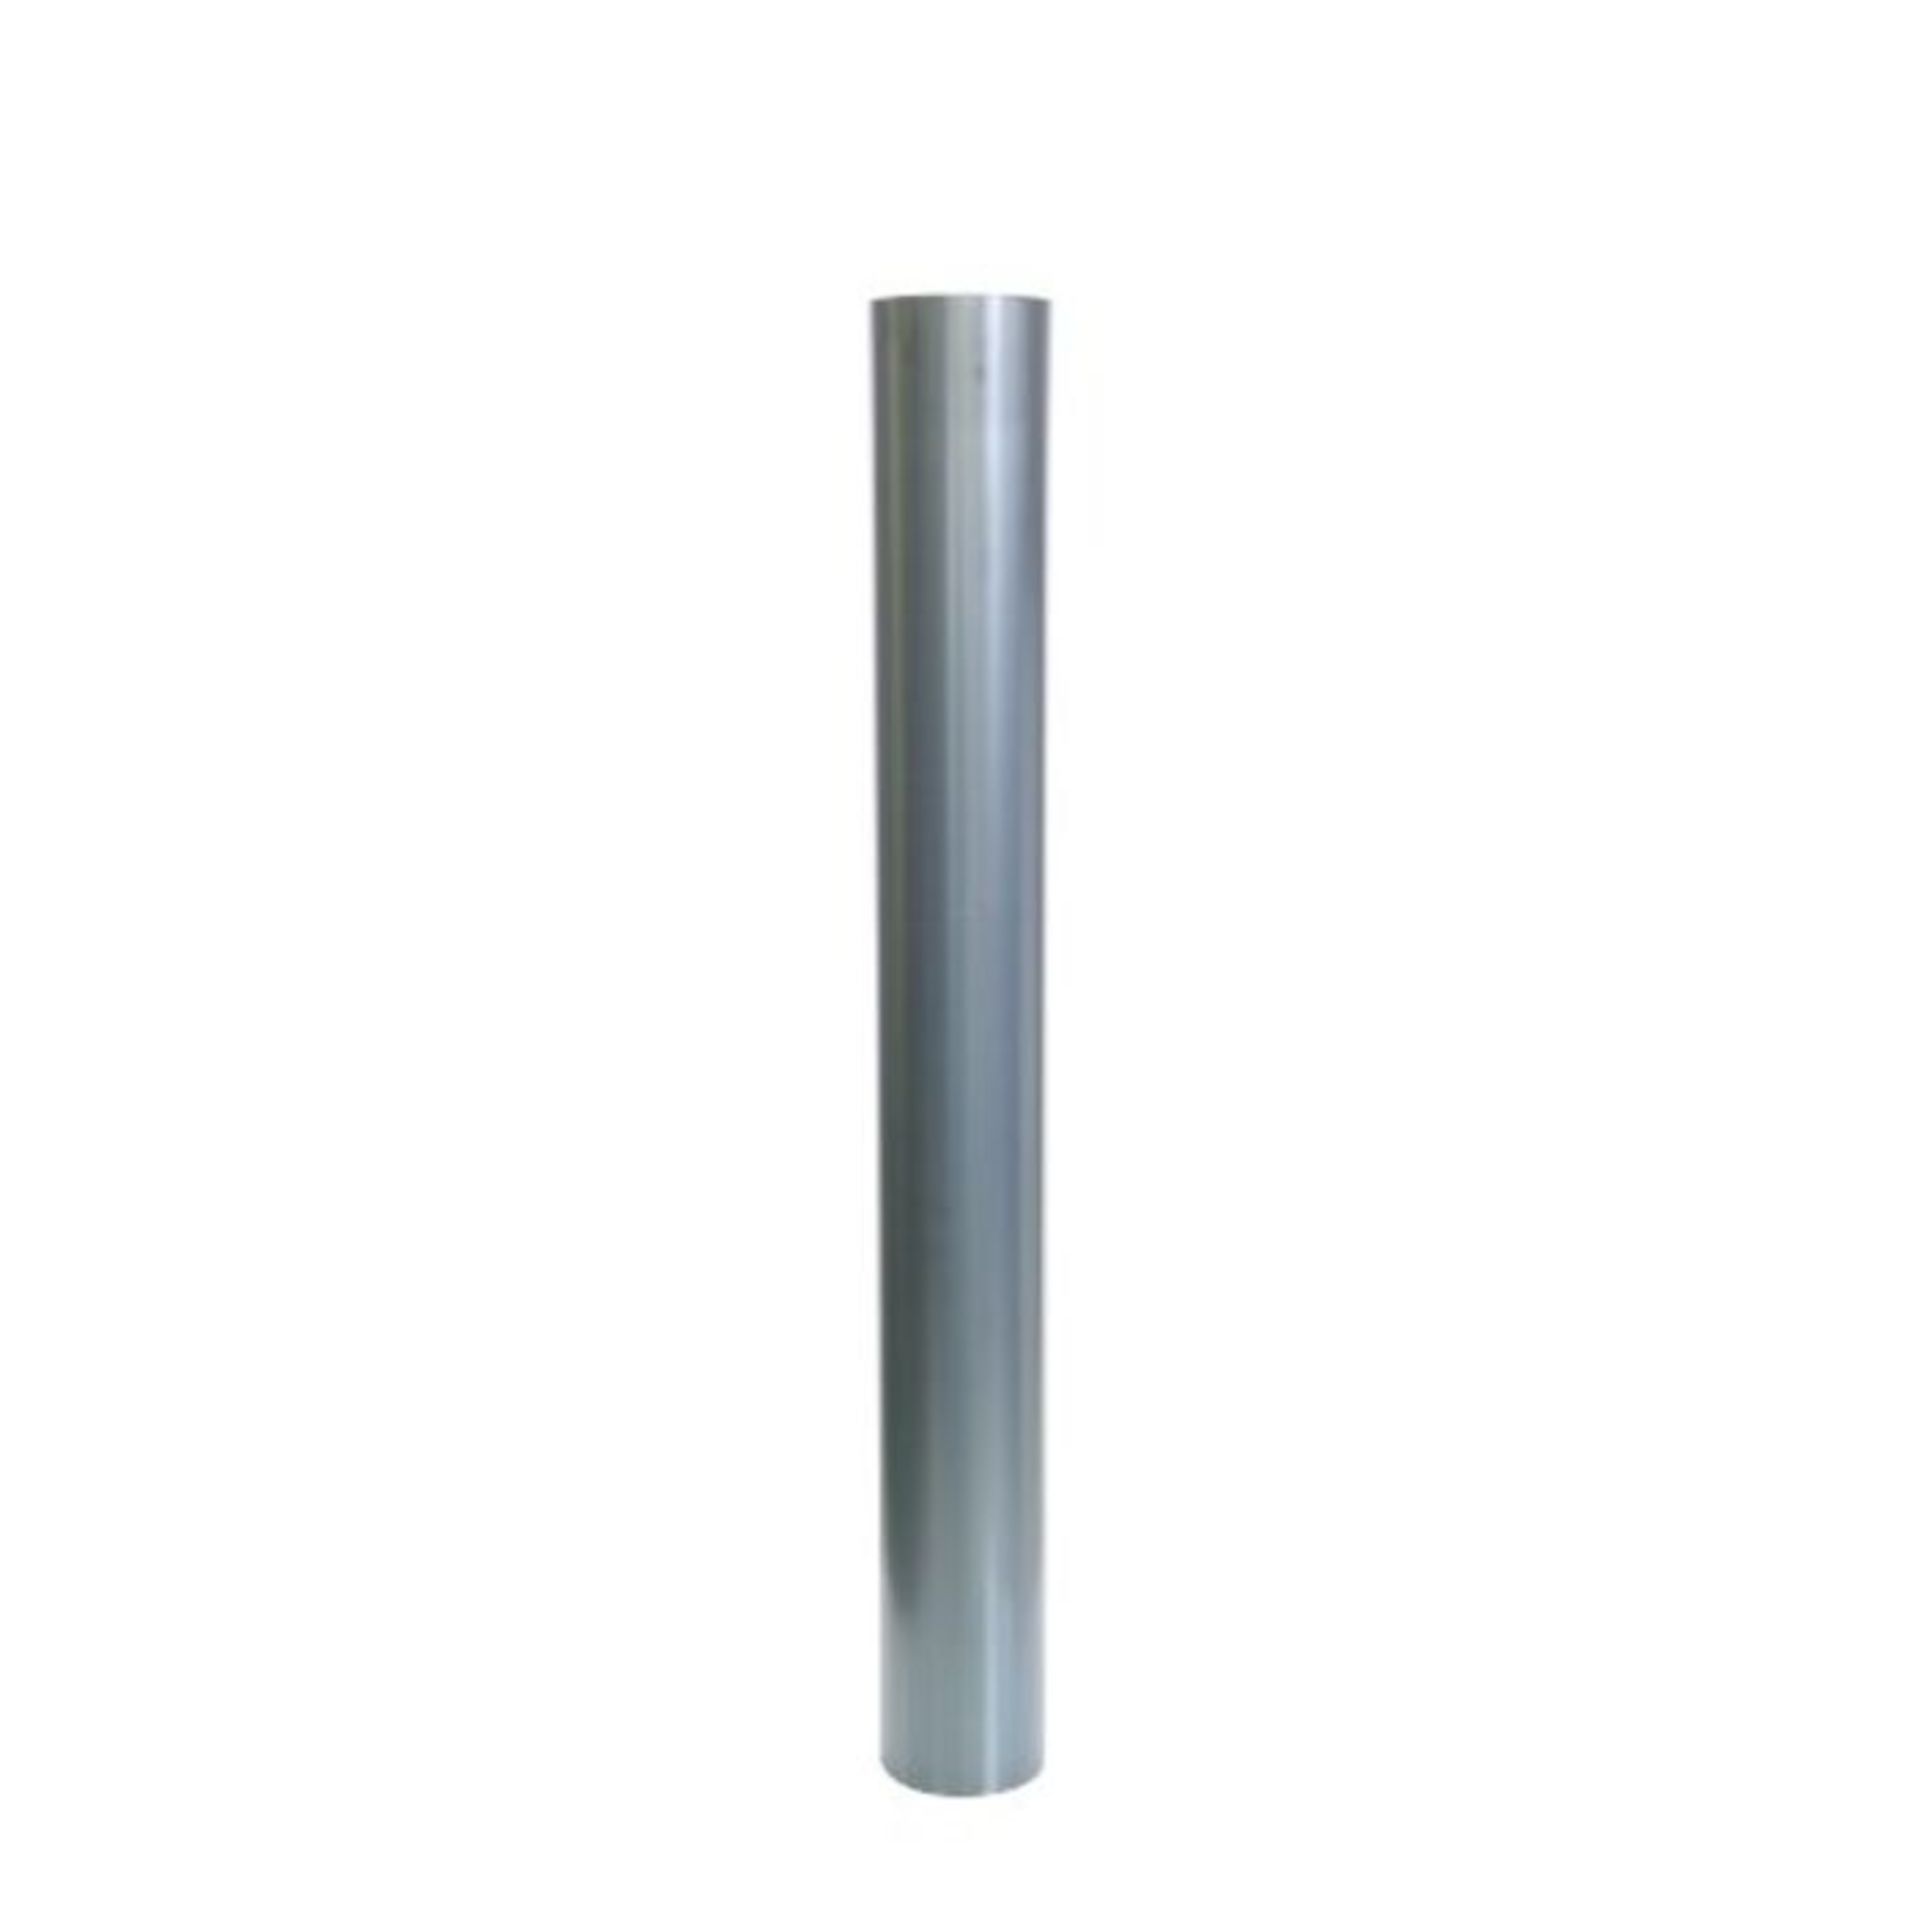 Kamino-Flam âÆaÃ² 120 mm Hot-dip Aluminised (FAL) Steel Stove Pipe, approx. 1000